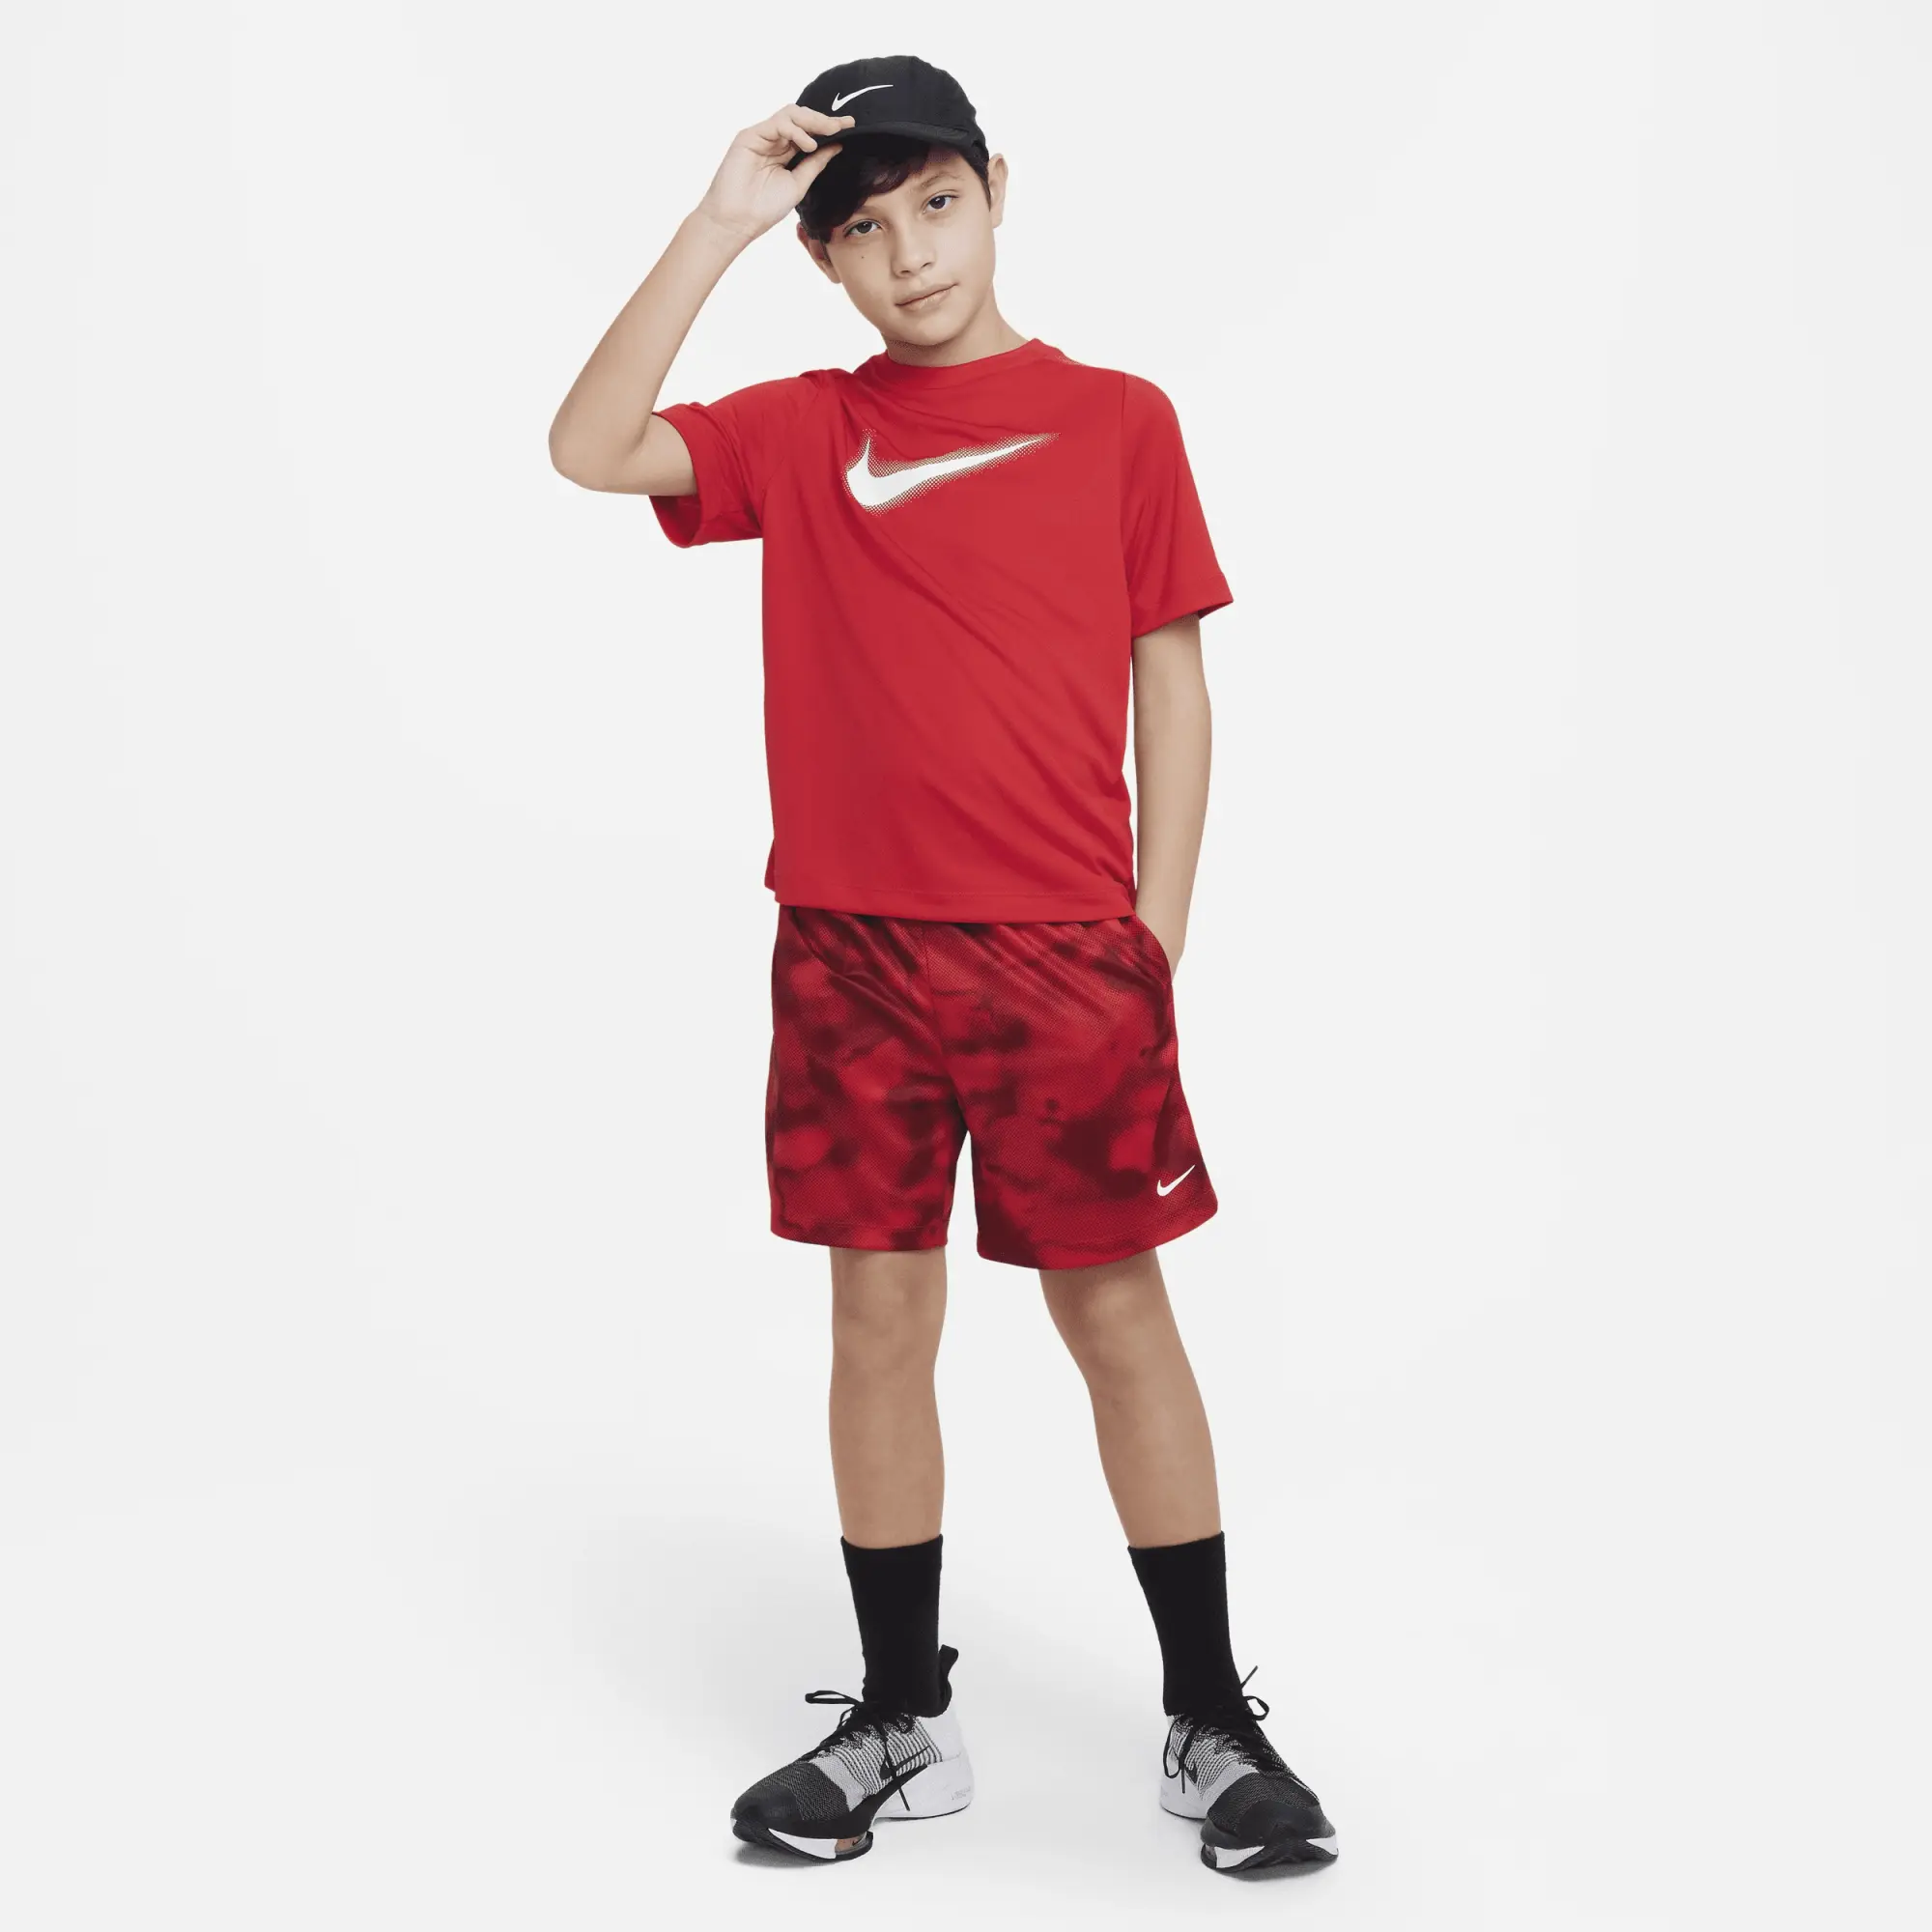 Nike Dri-Fit Graphic T-Shirt Boys - Red, White